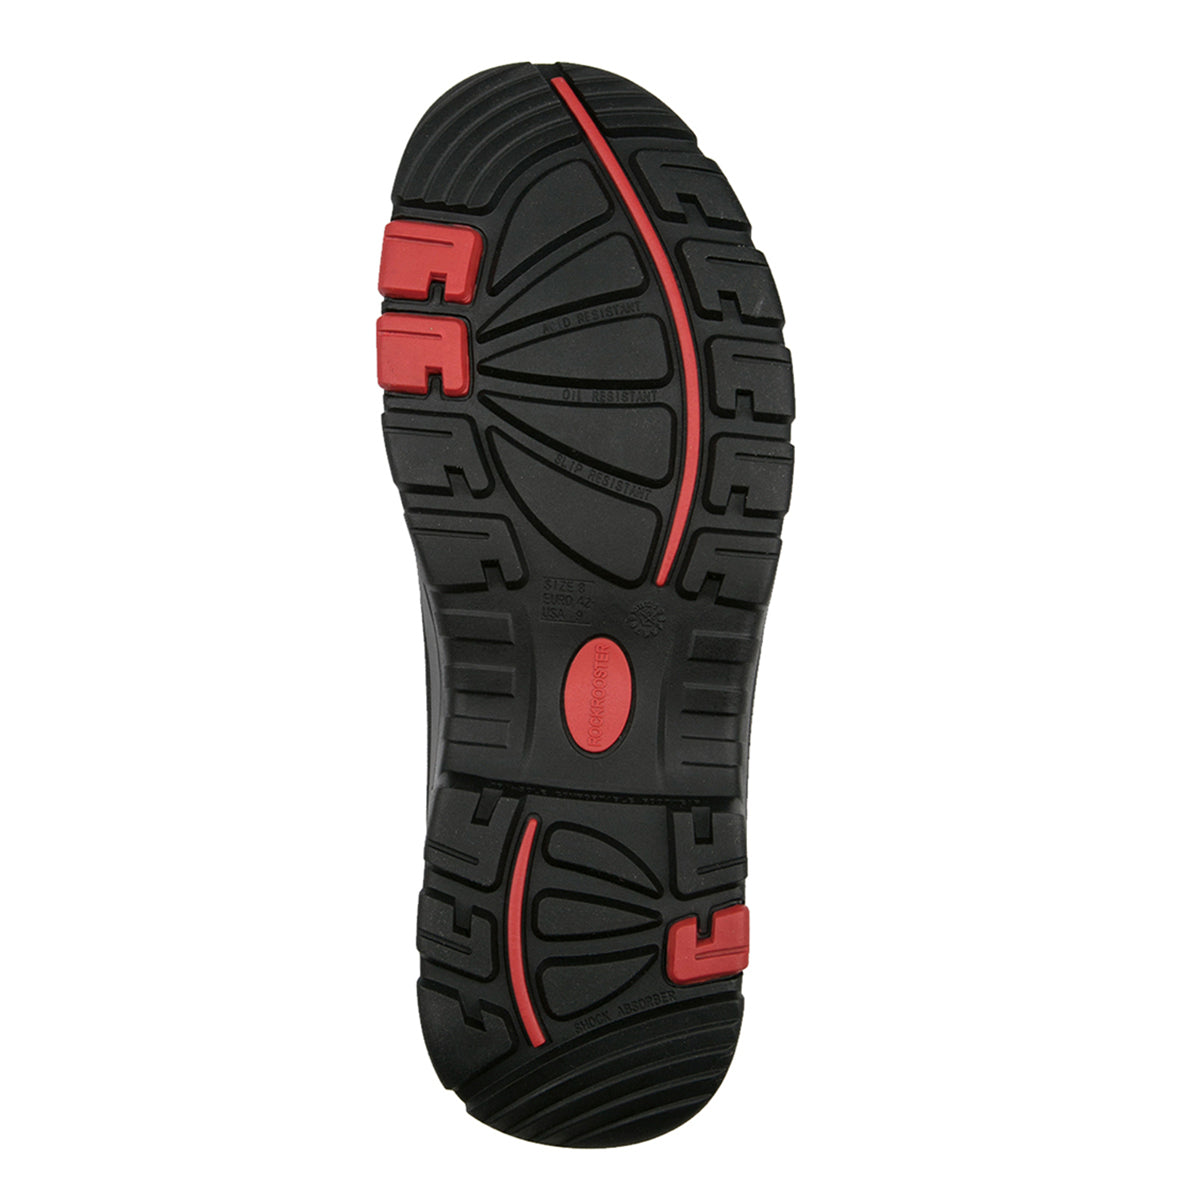 ROCKROOSTER Bakken 6 inch Soft Toe Black Leather Waterproof Work Boots - Mercantile Mountain